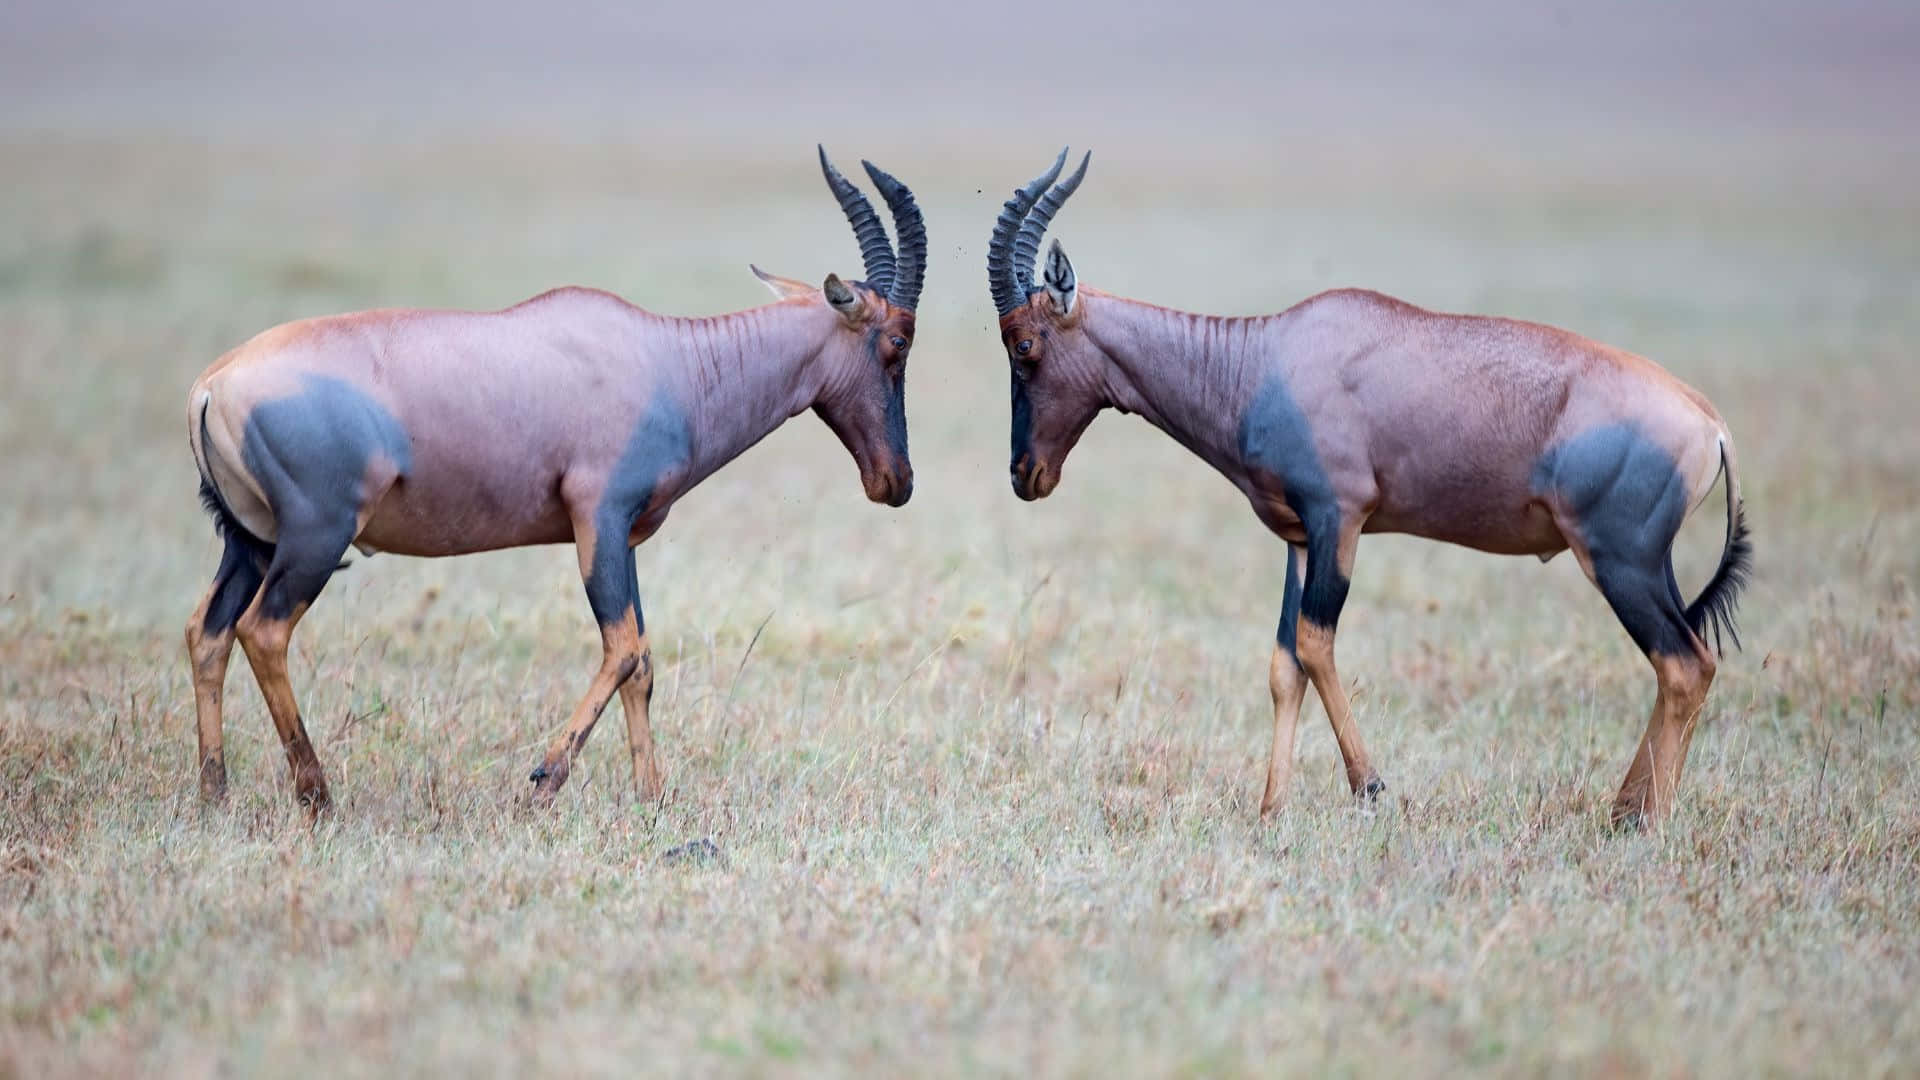 Topi Antelopes Confrontation Wallpaper